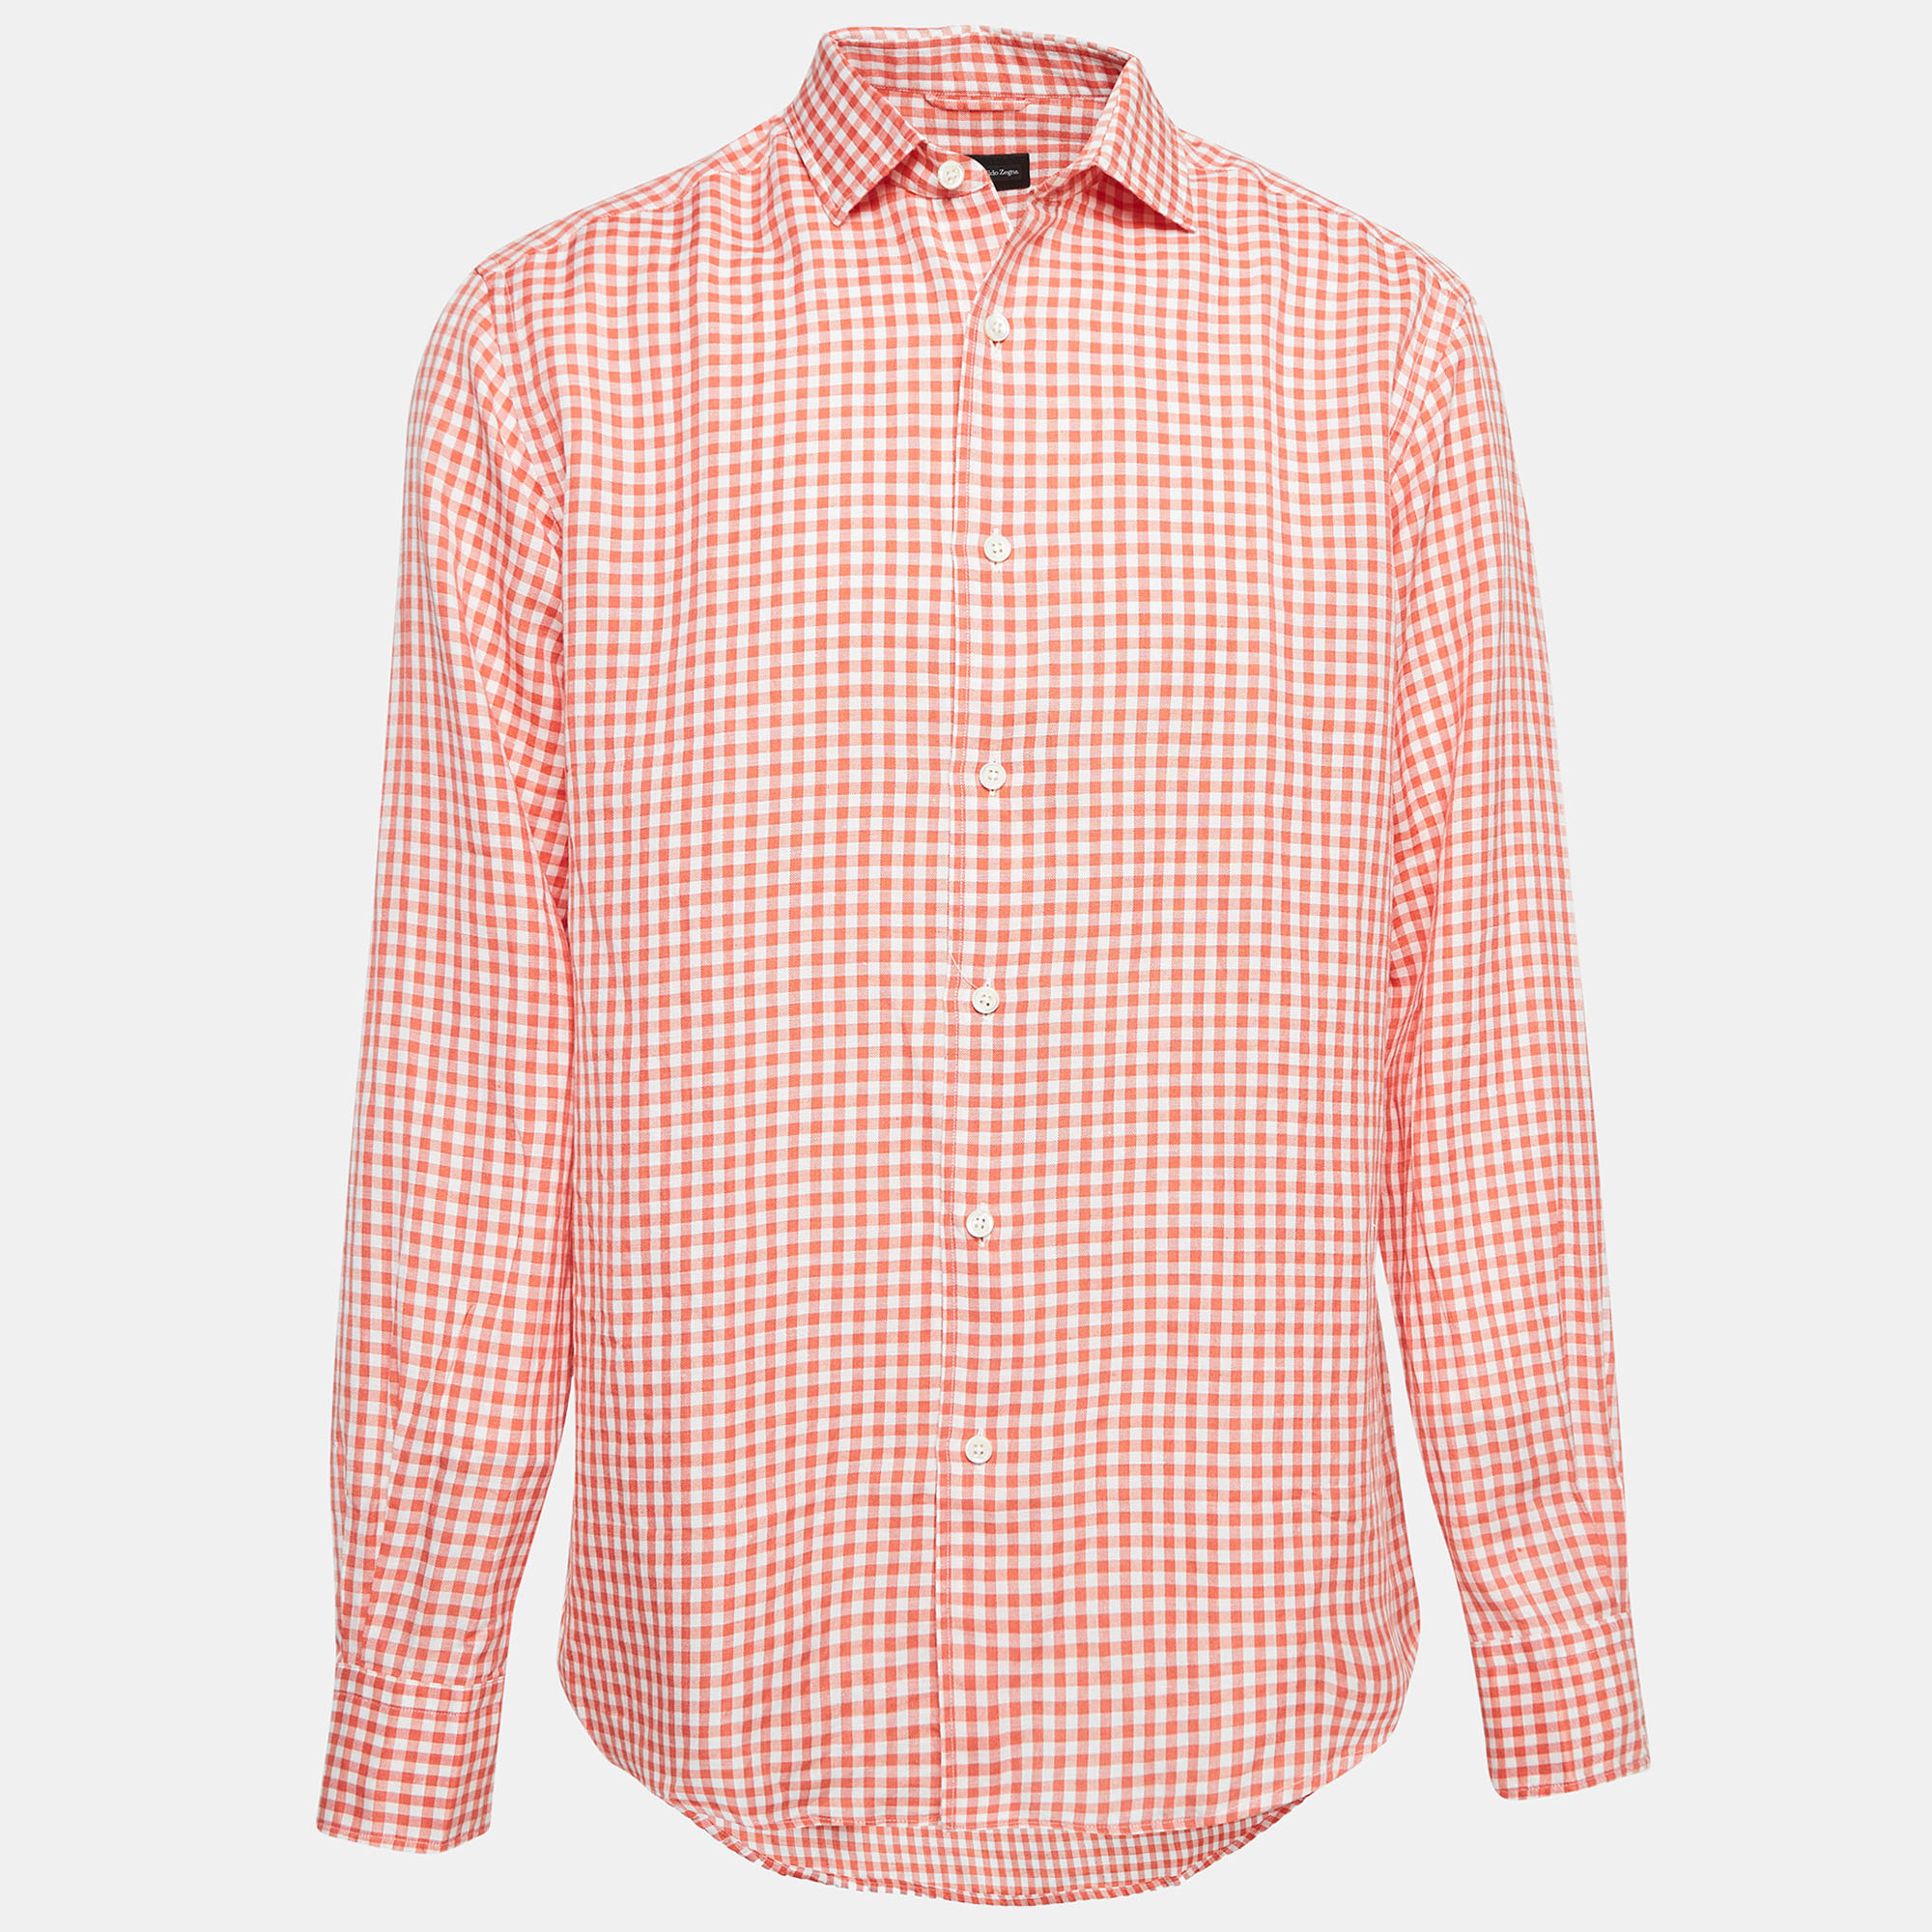 Ermenegildo zegna orange gingham cotton blend shirt xl